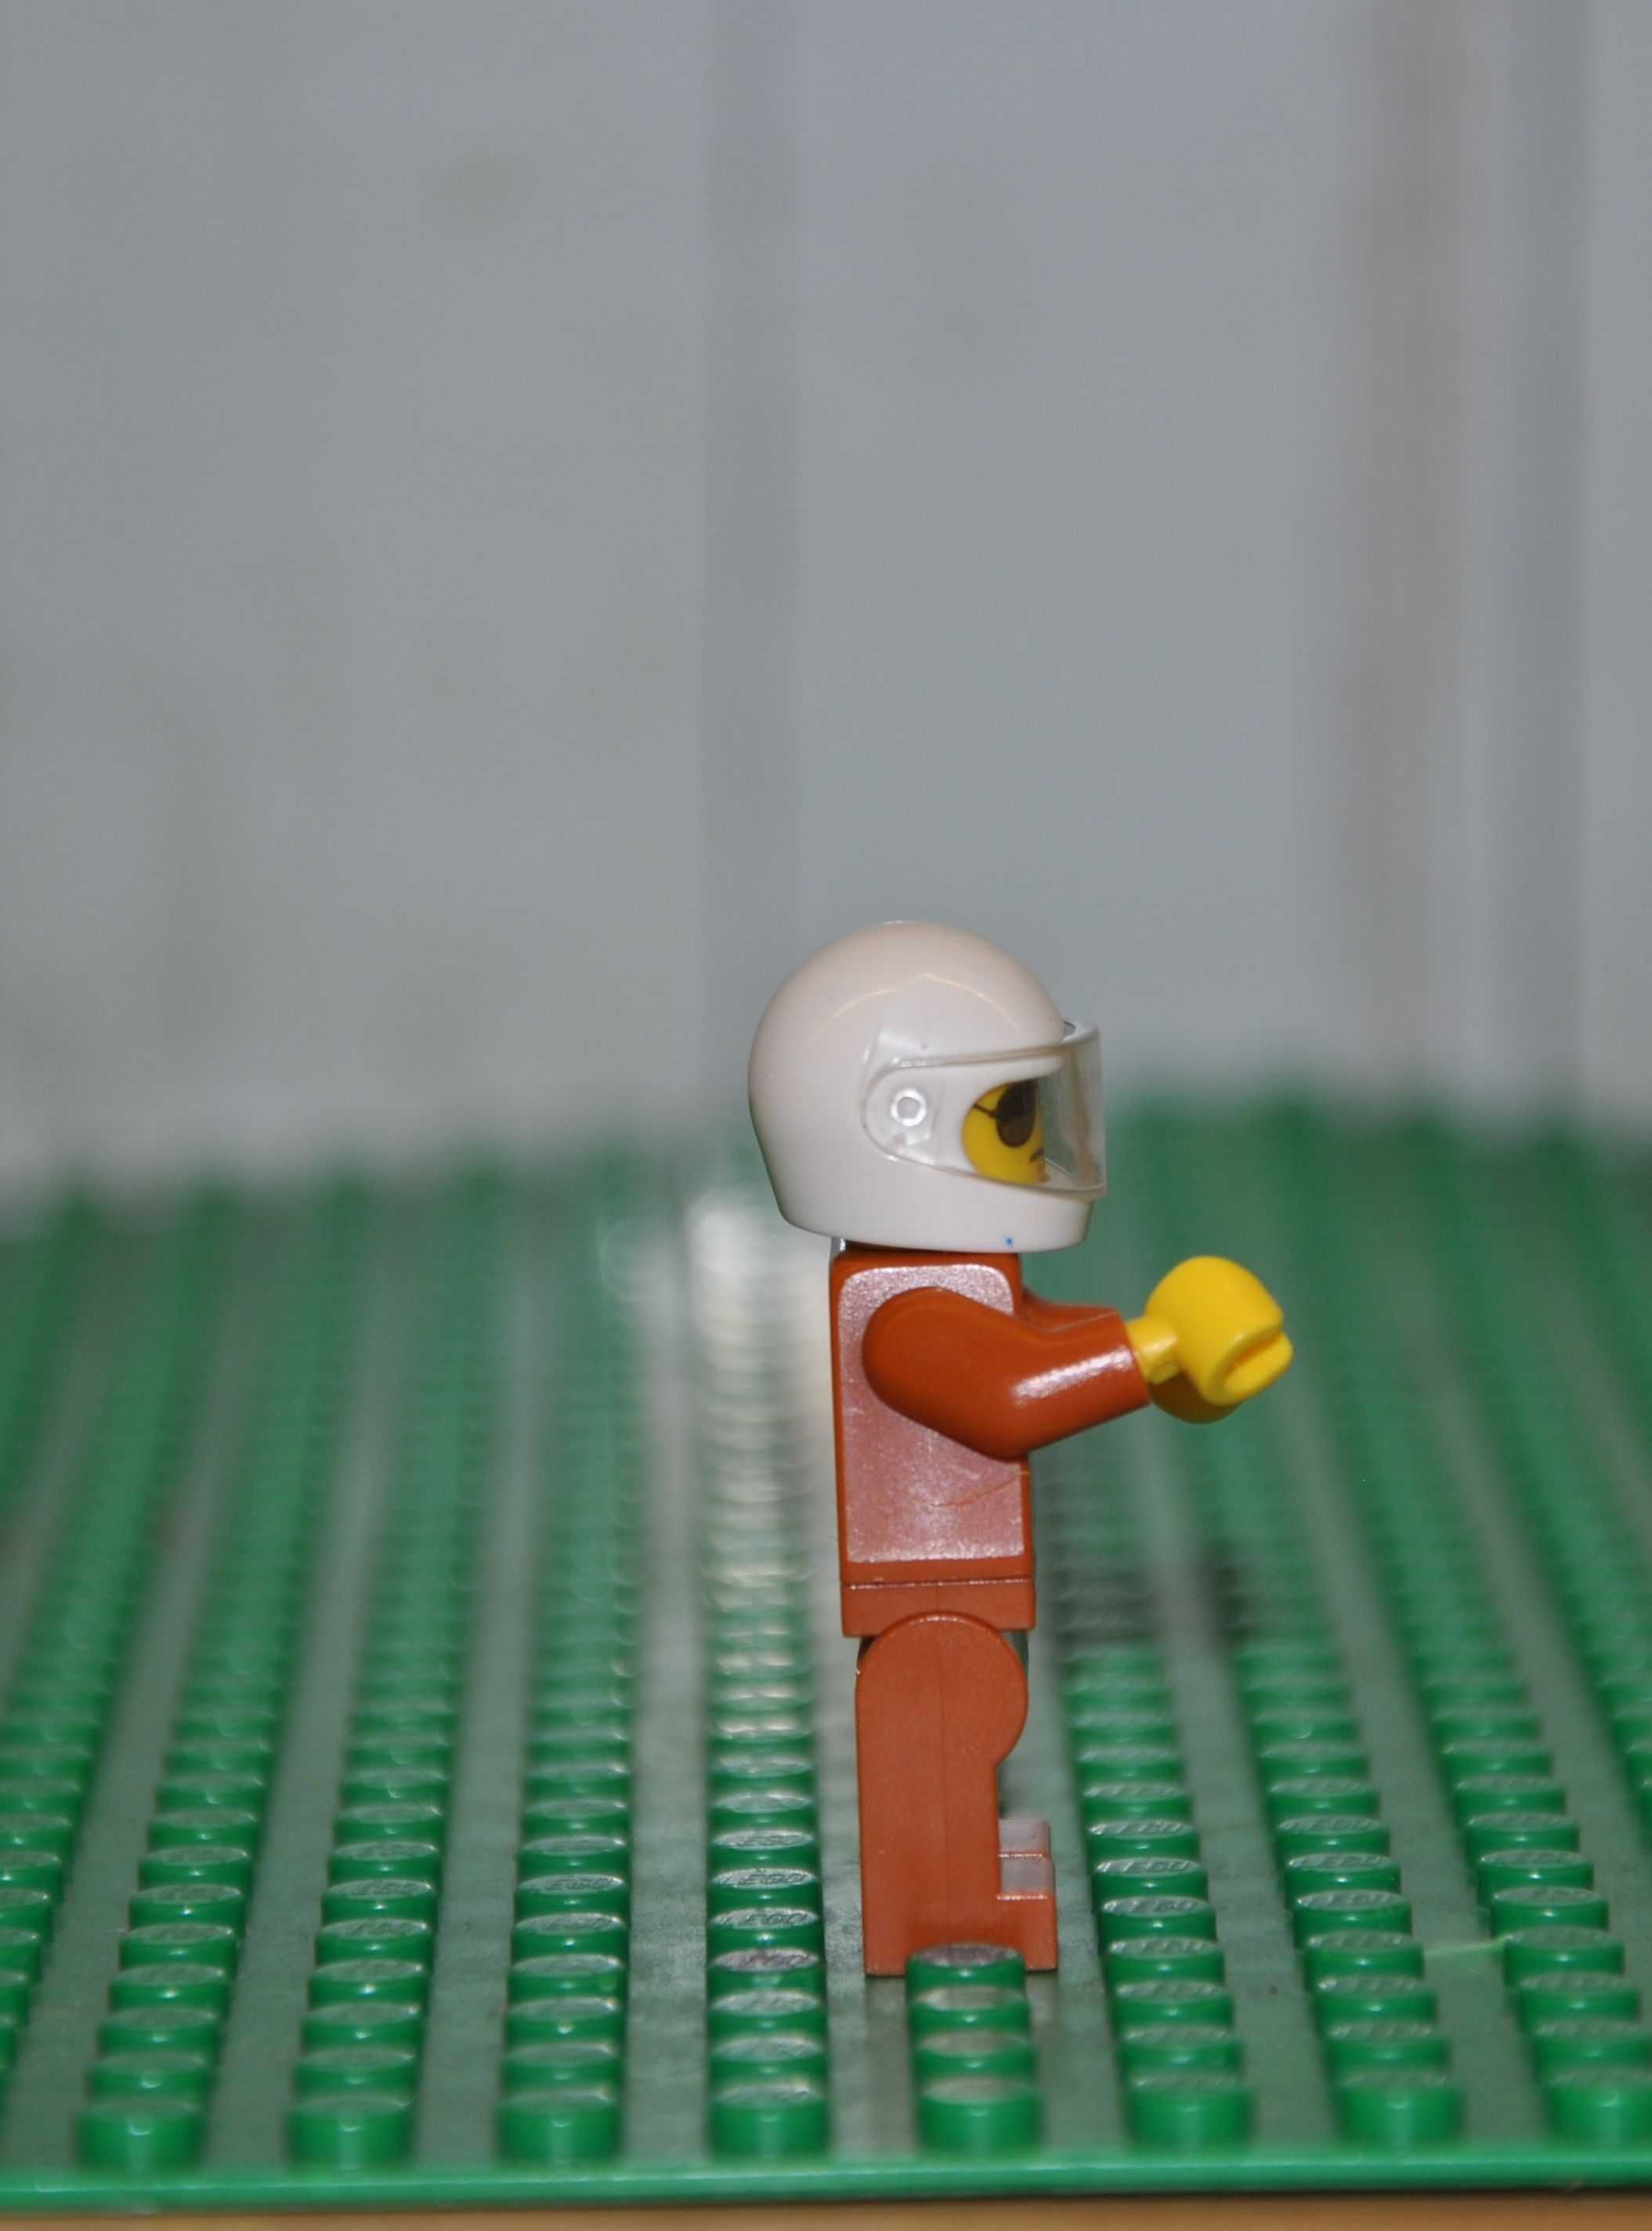 F0304. Figurka LEGO Town - twn364 Pilot